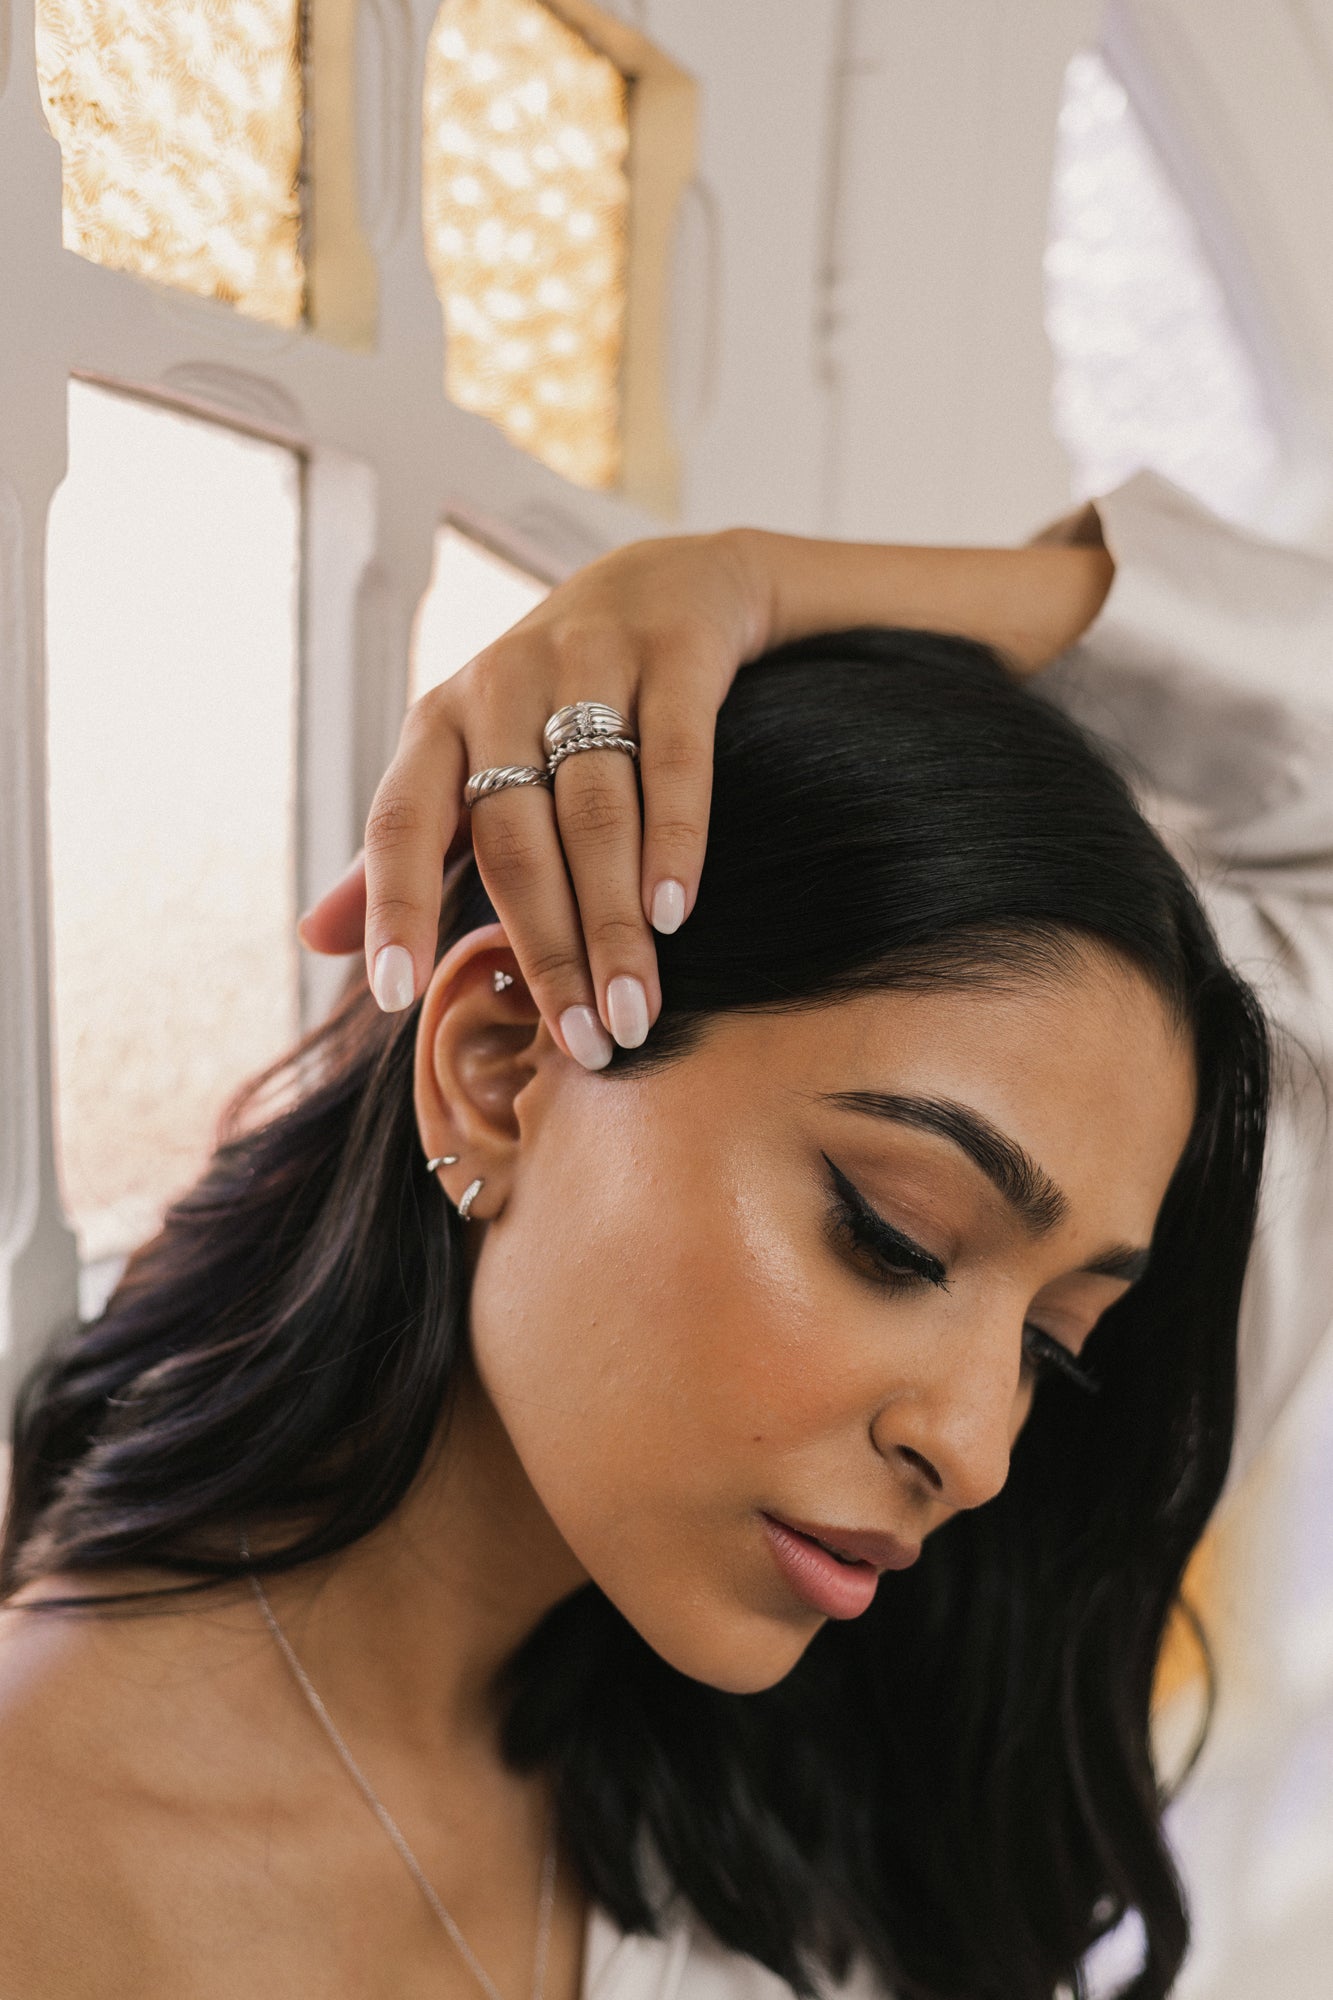 Georgia earring